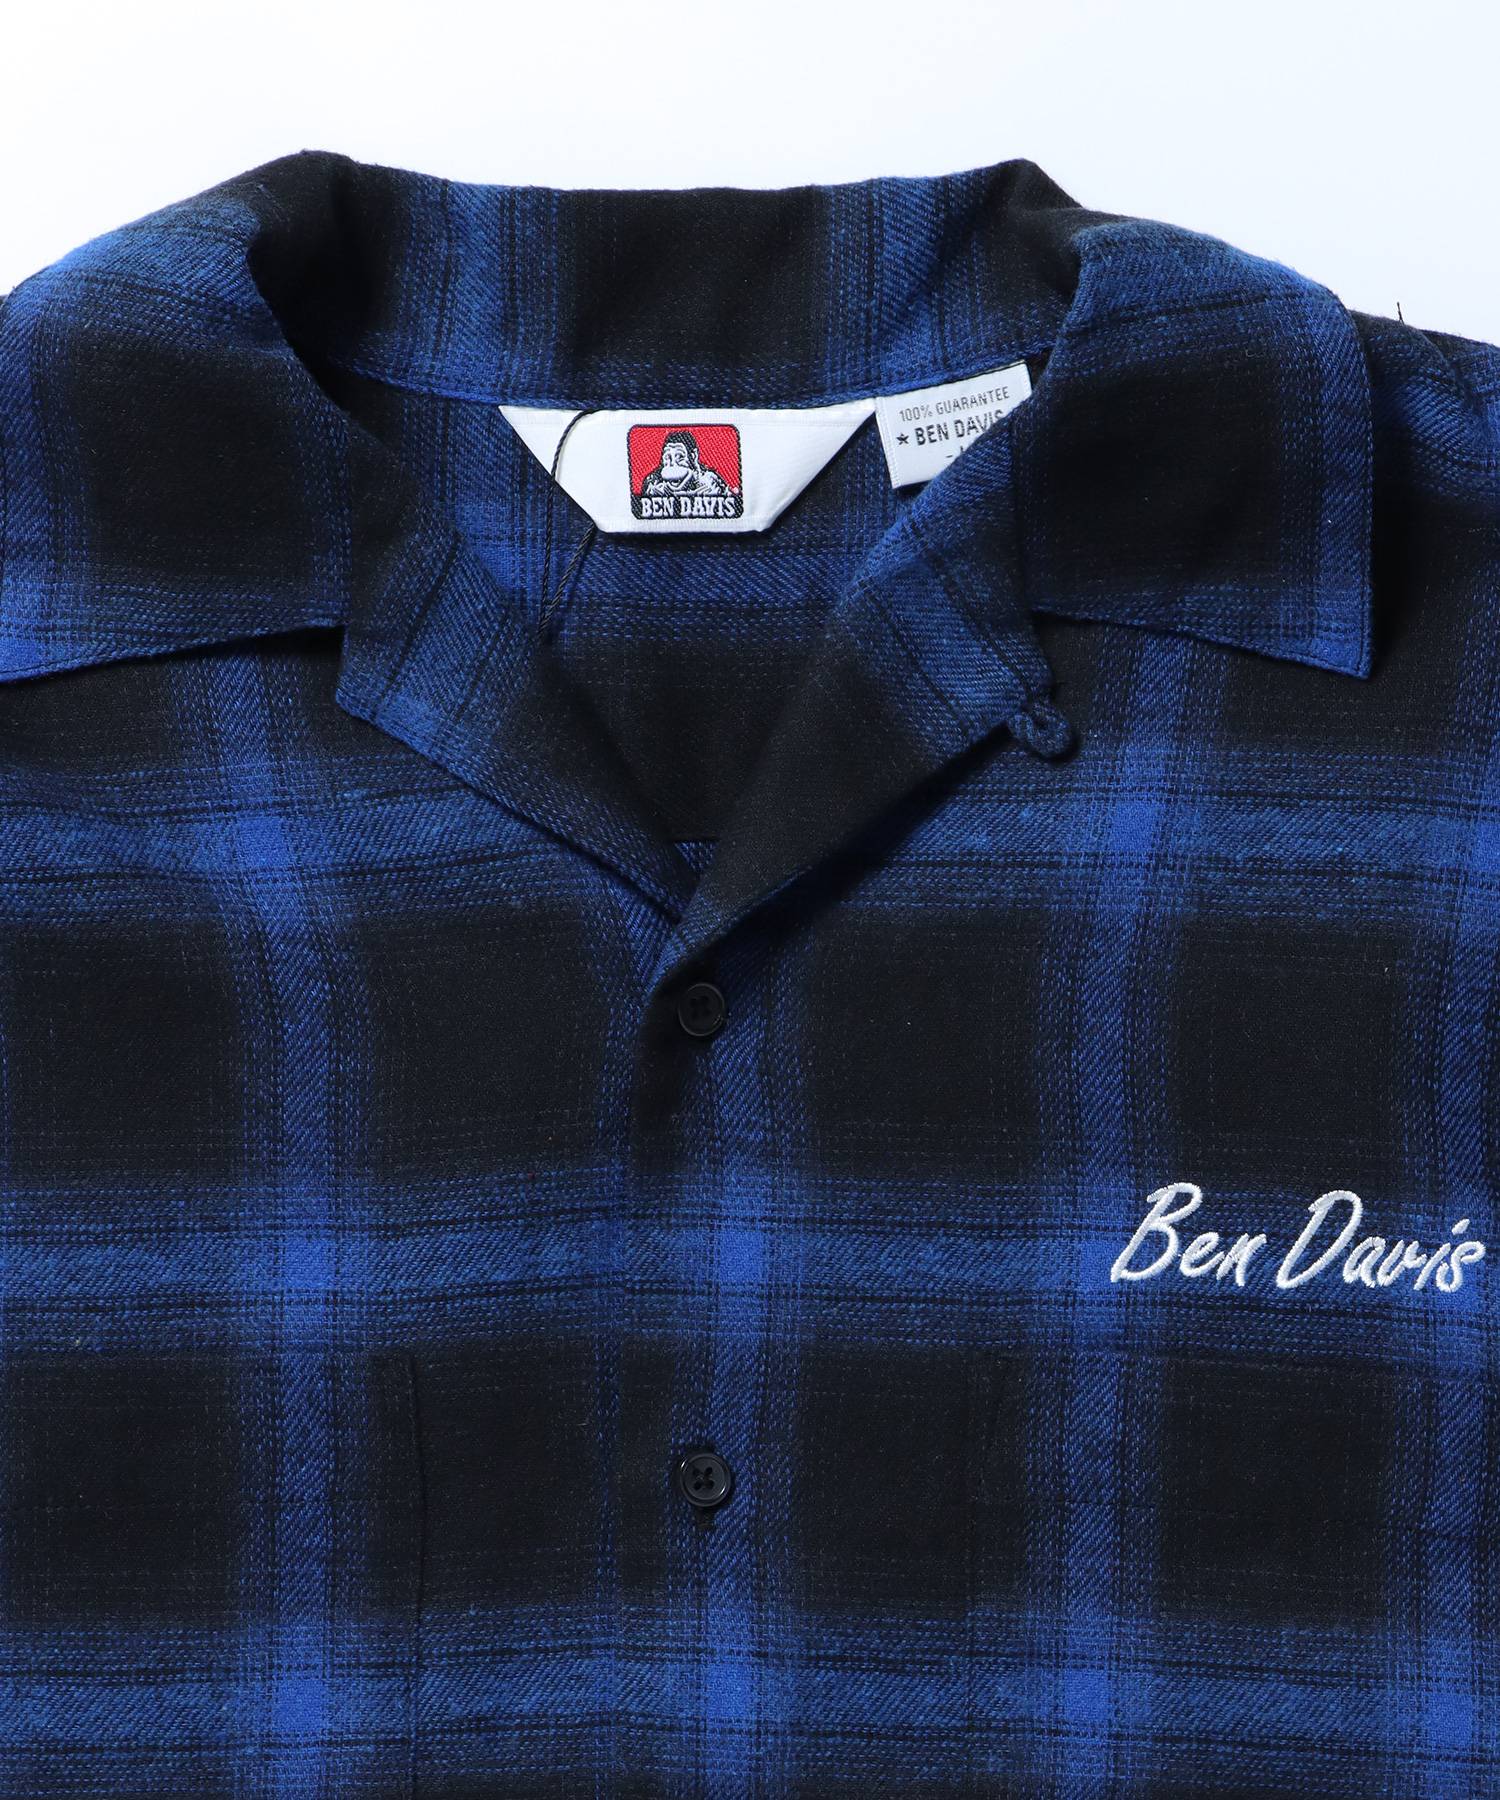 【BEN DAVIS(ベンデイビス)】 STICHED PLAID SHIRT / チェック 古着 刺繍 シャツ 長袖 ブルー